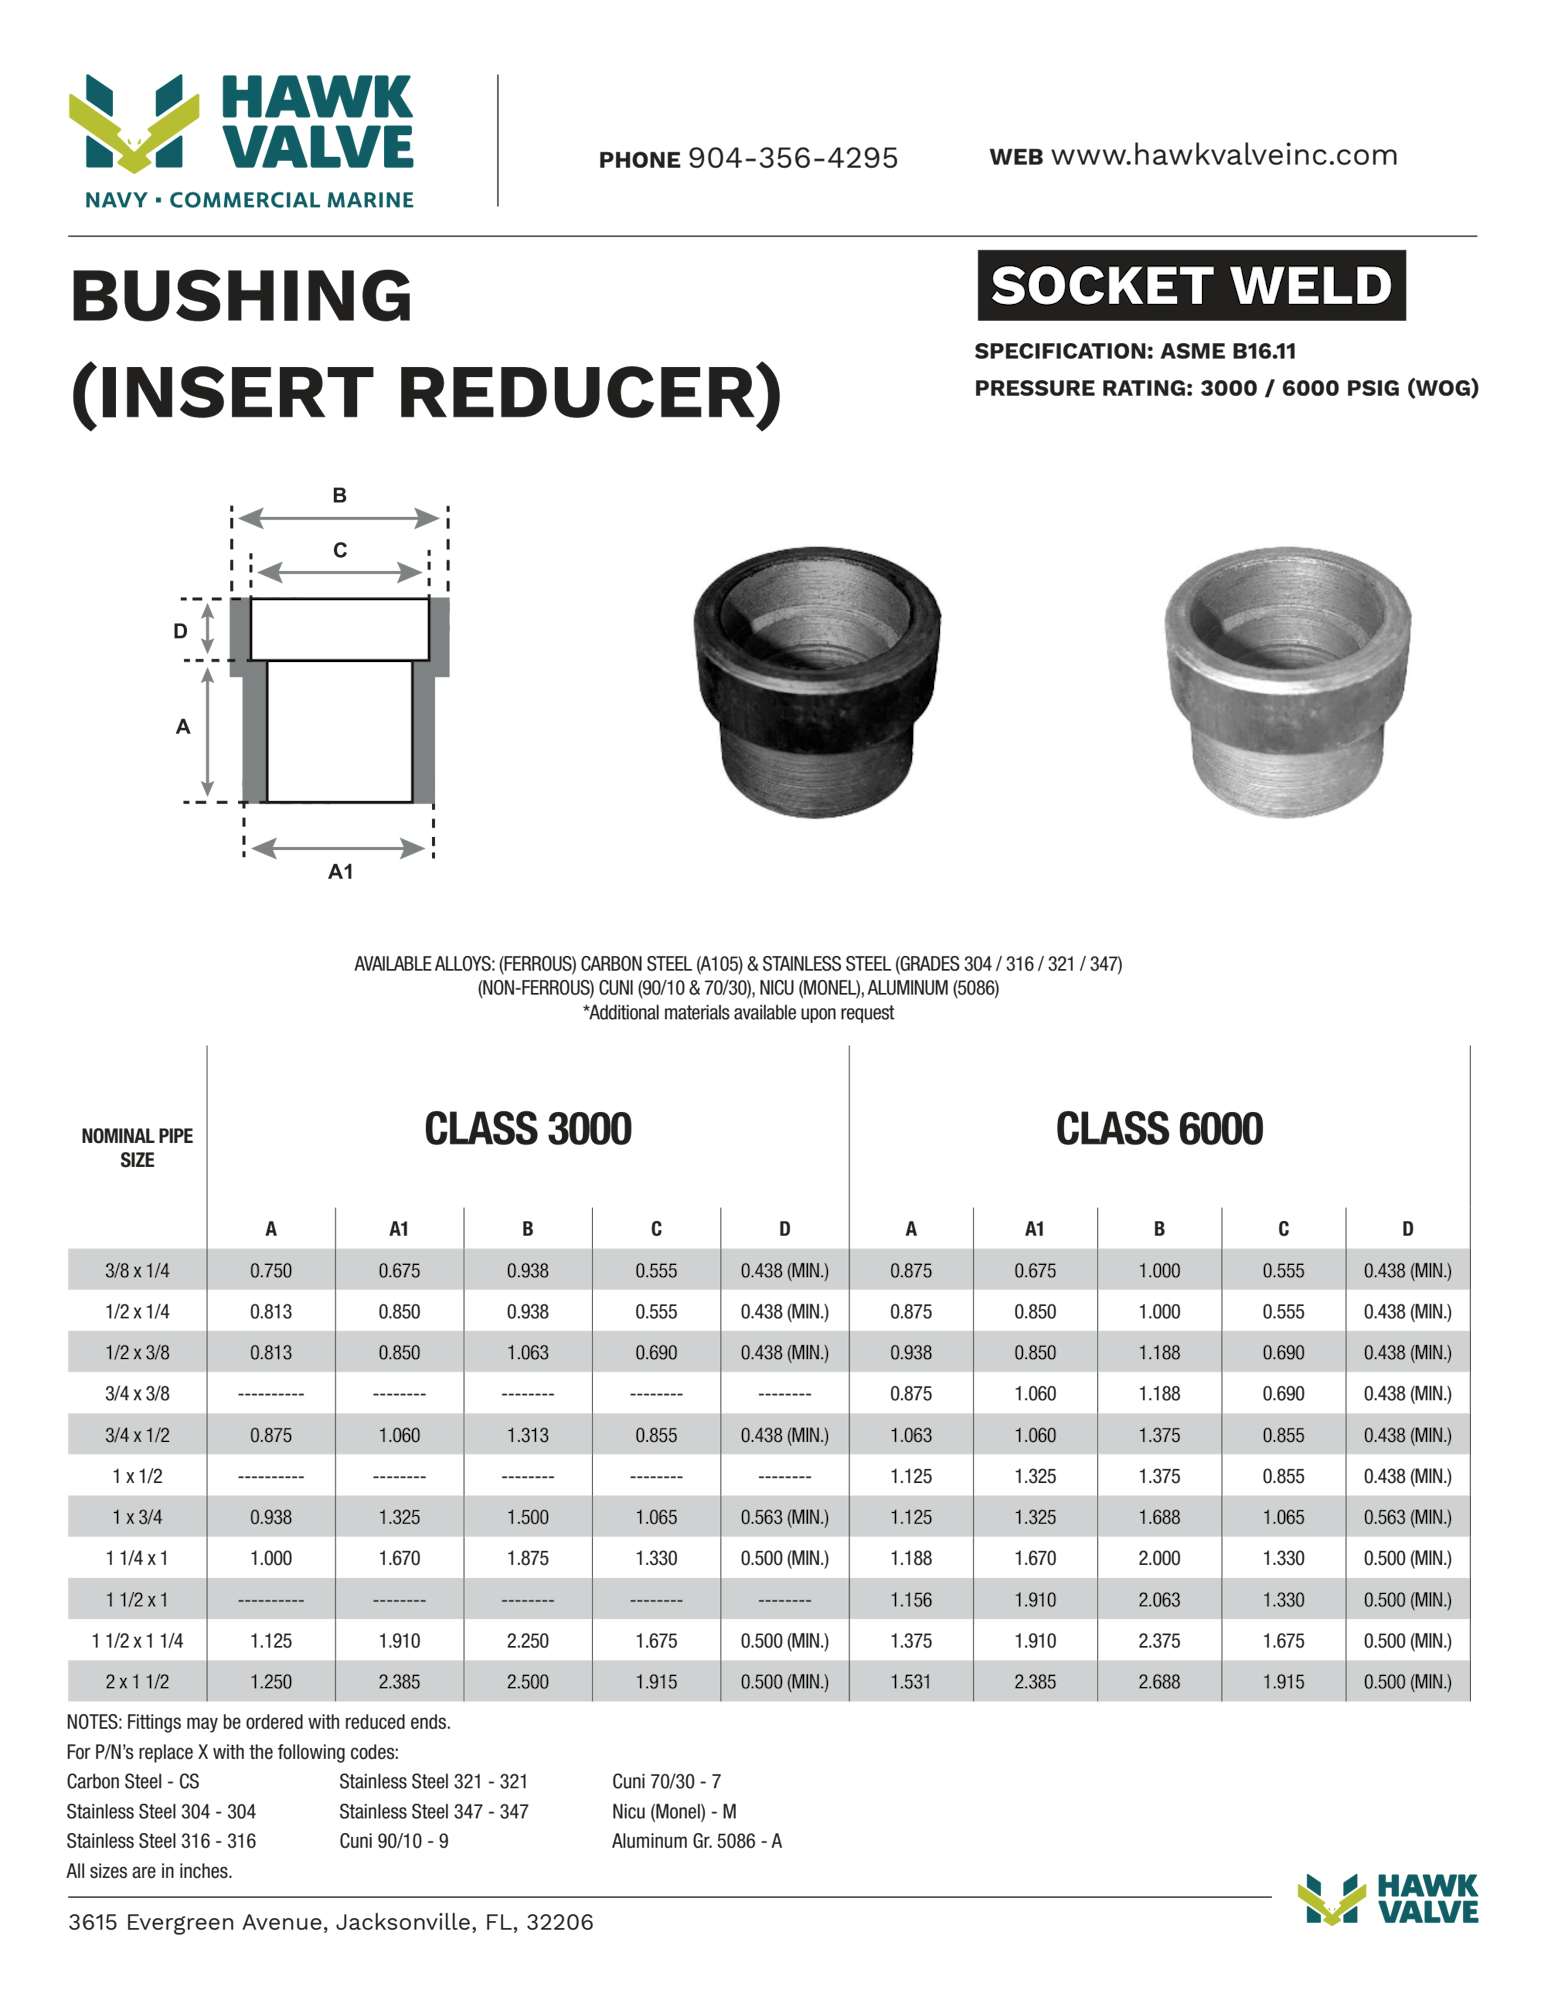 Socketweld-Rushing-Insert-Reducer.pdf